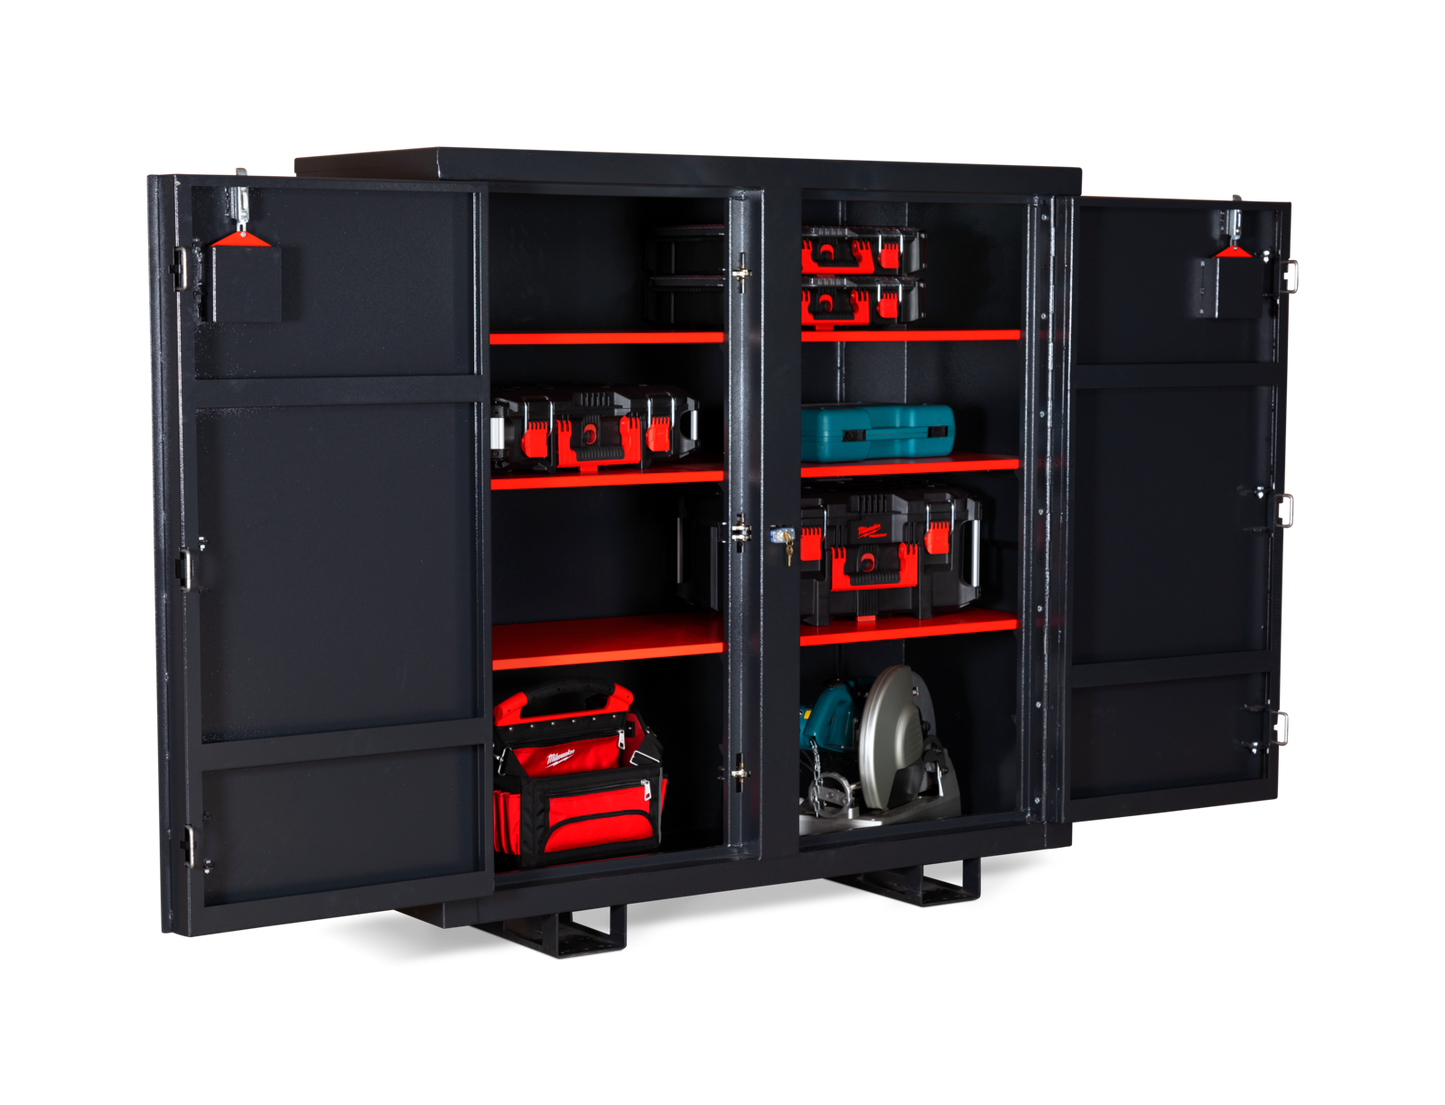 Job box, Vertical Jobsite Storage Box by ArmorGard- Siteboss Cabinet